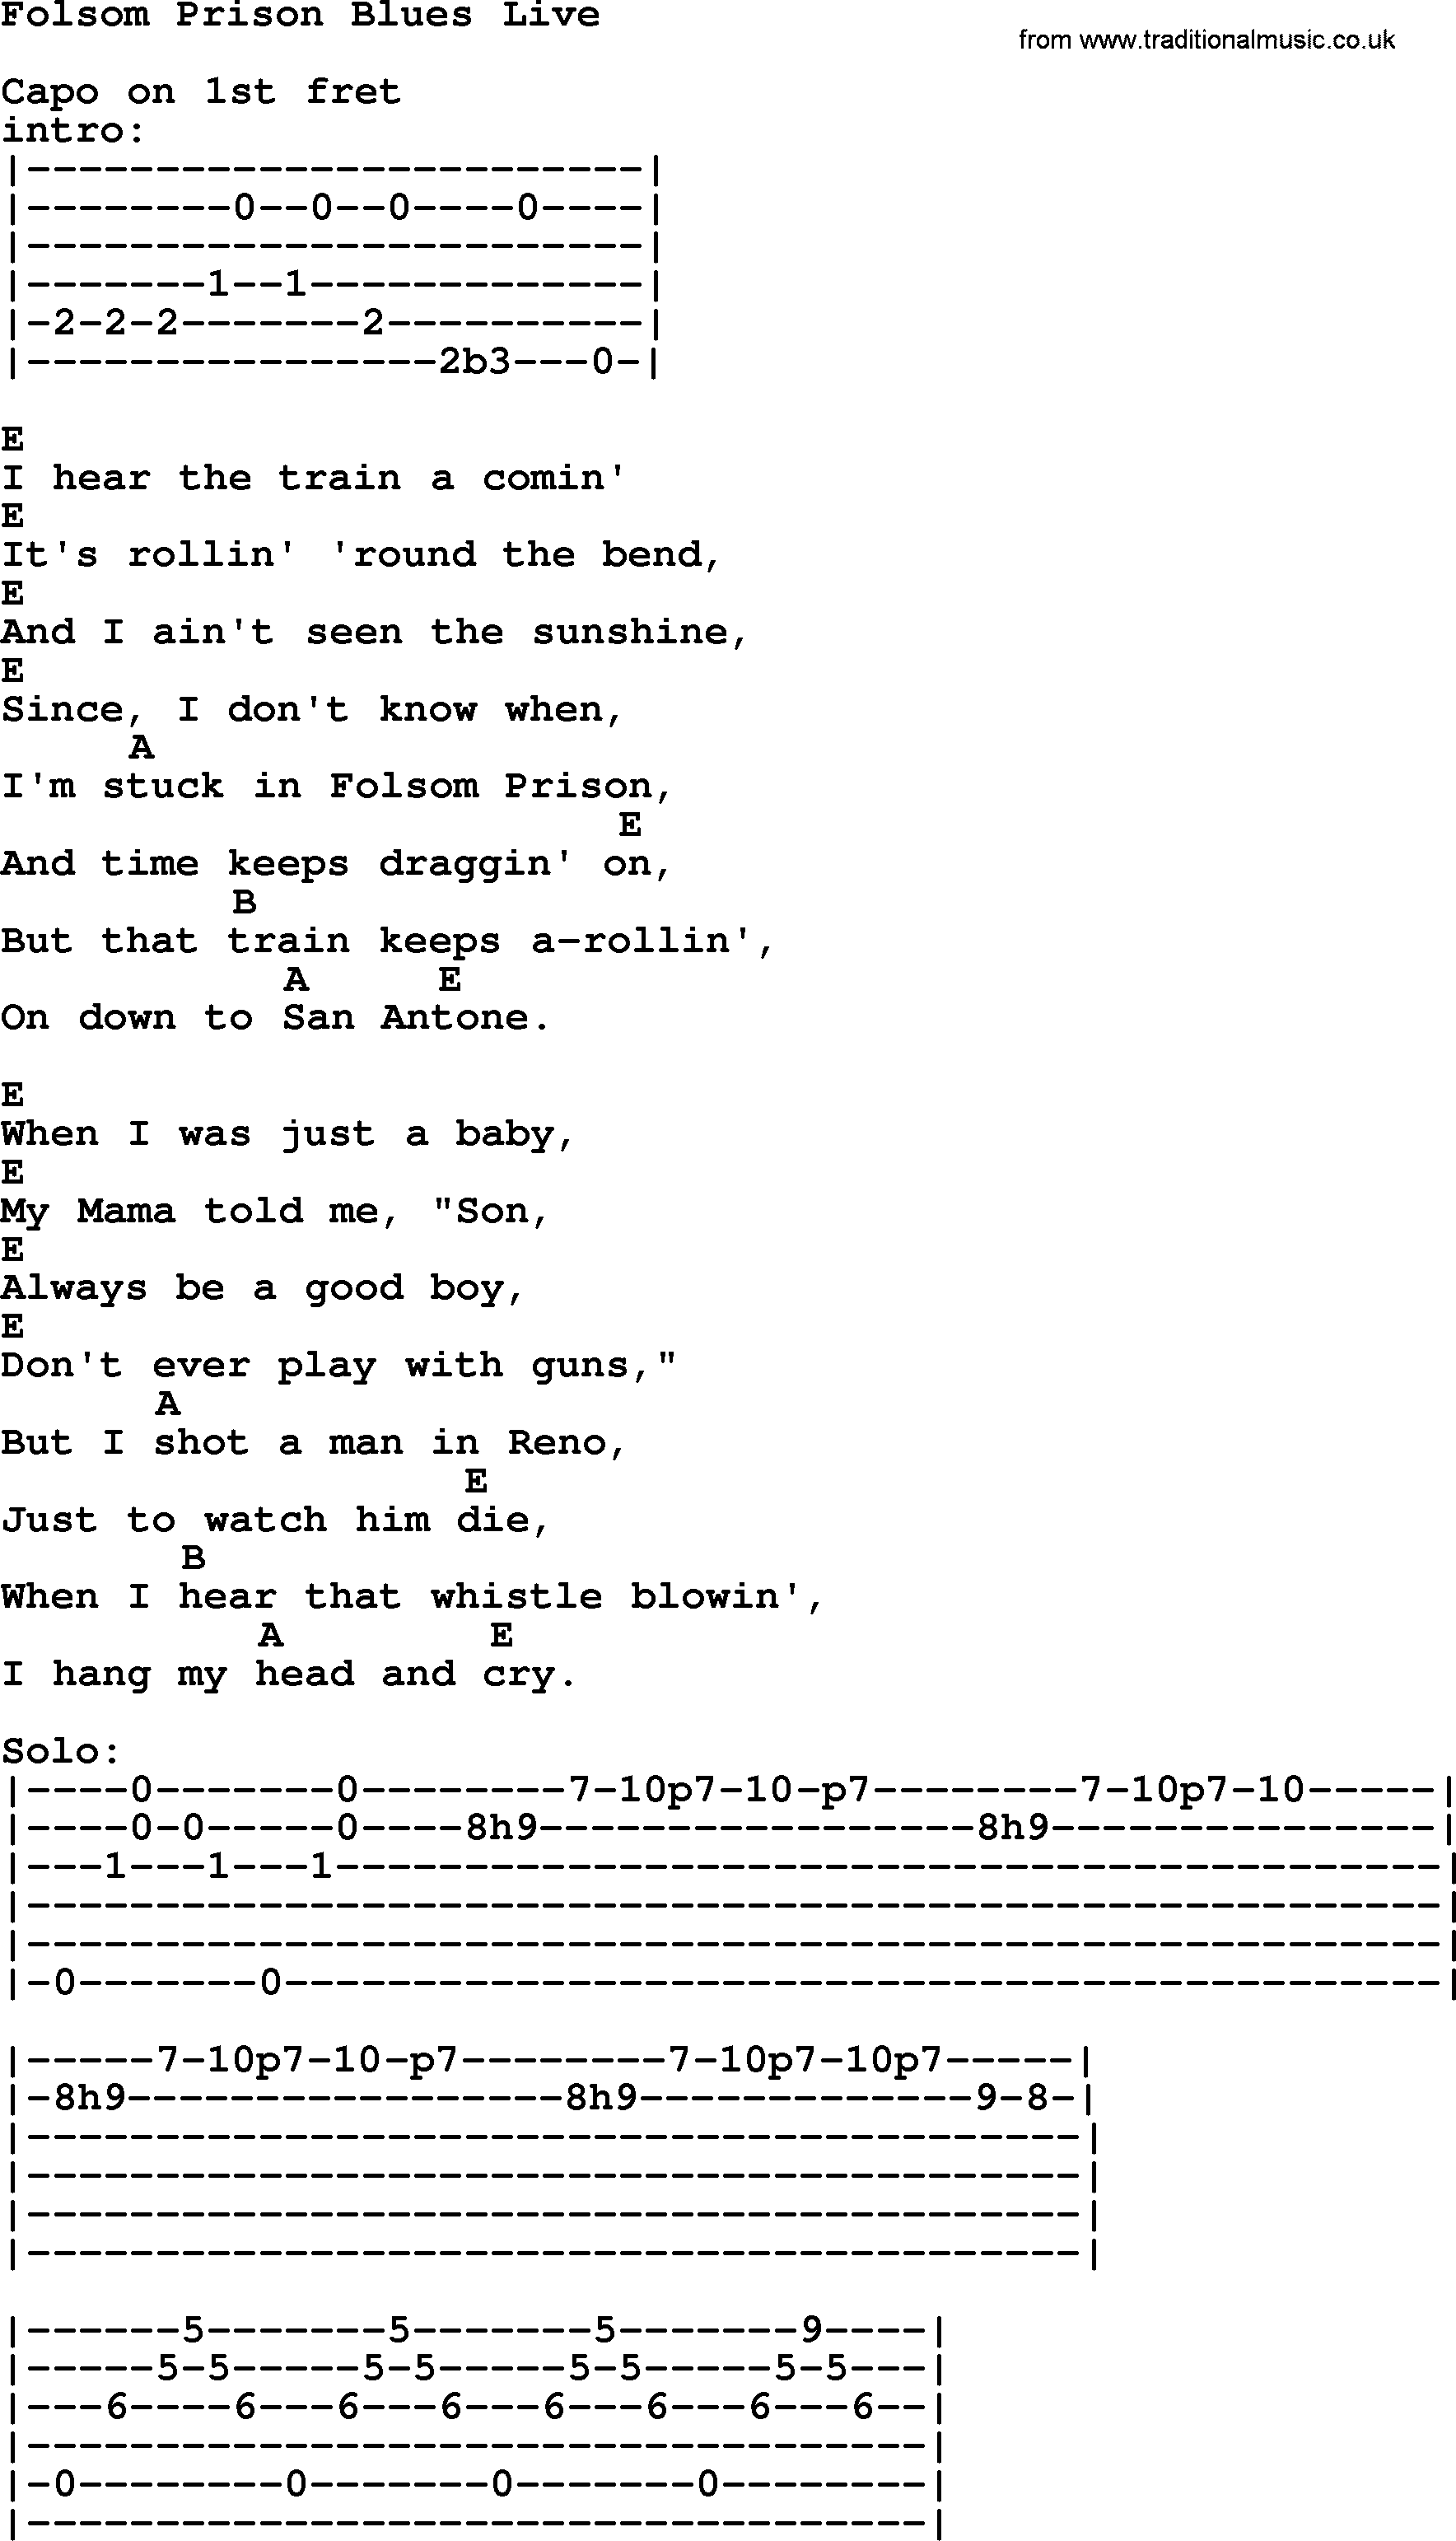 Johnny Cash song Folsom Prison Blues Live, lyrics and chords